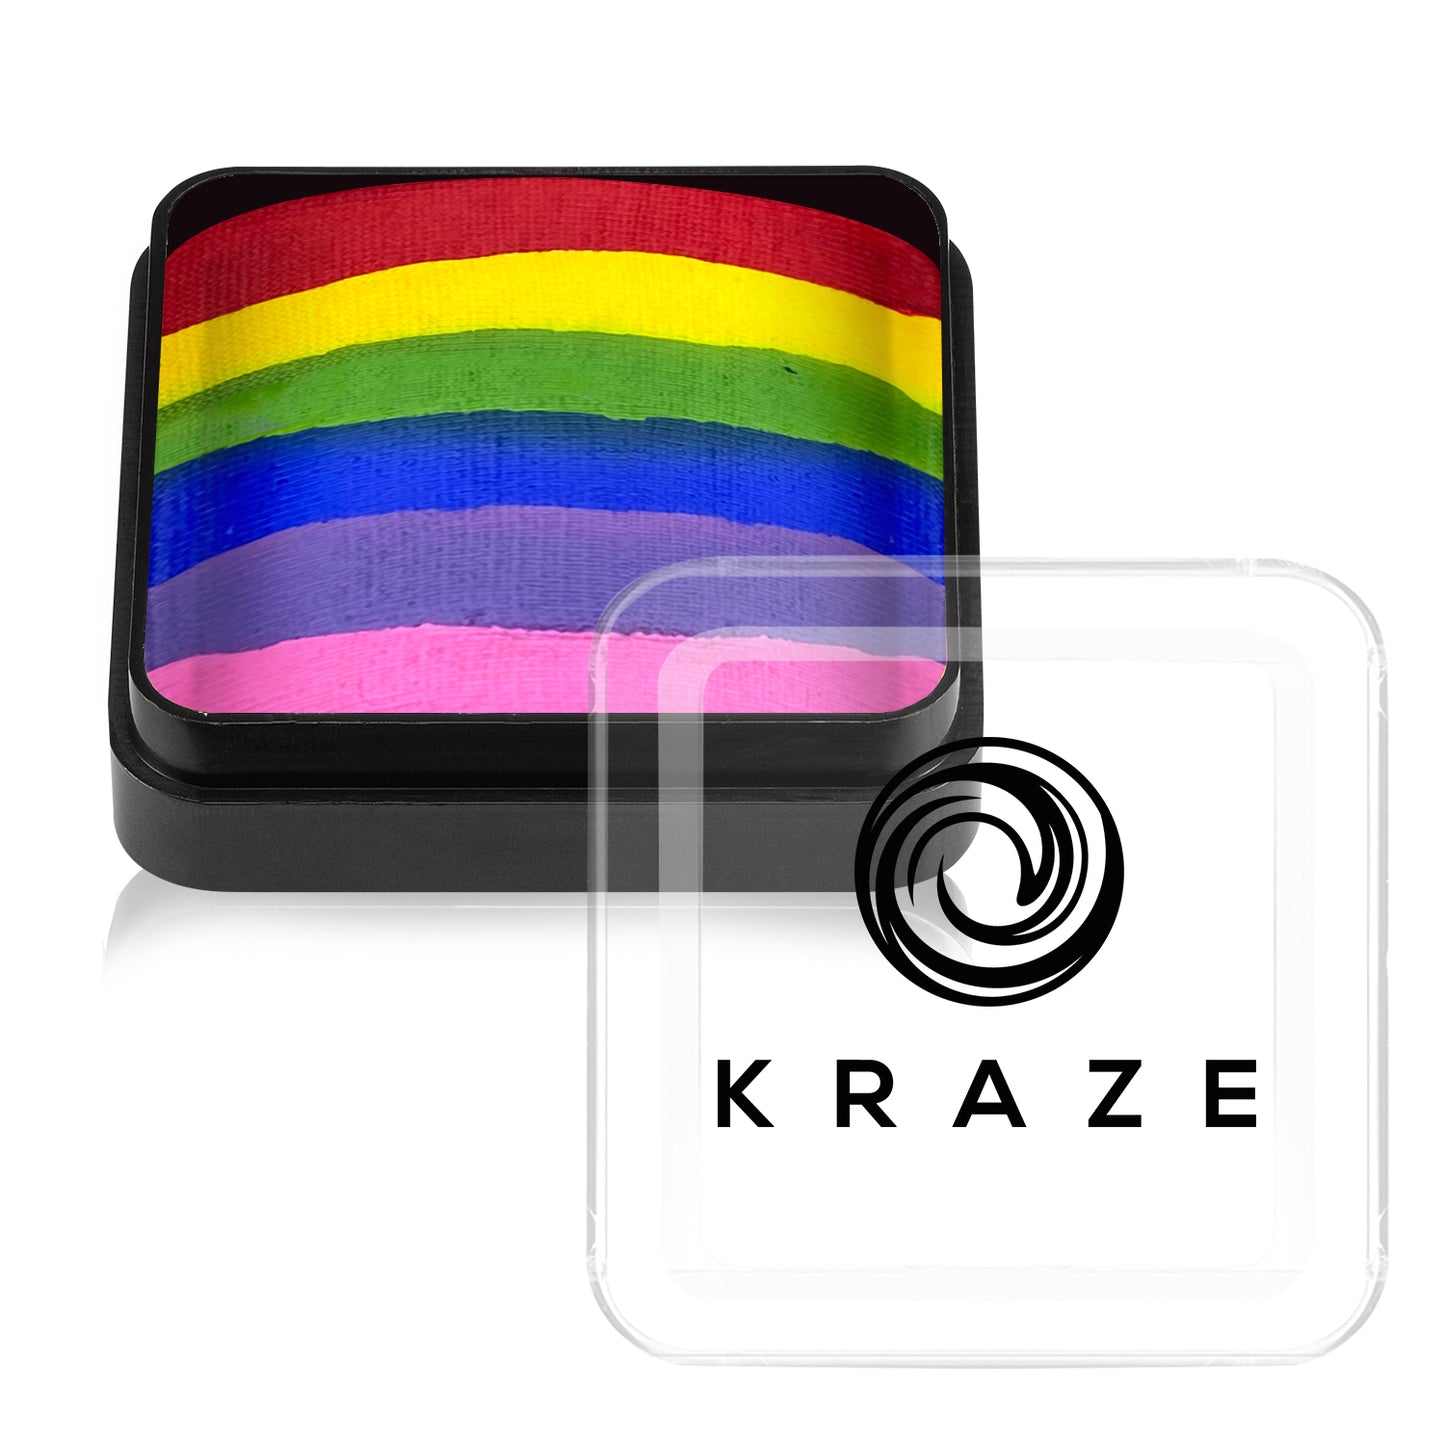 Kraze FX Domed Square Split Cake - Rainbow Roar (25 gm)